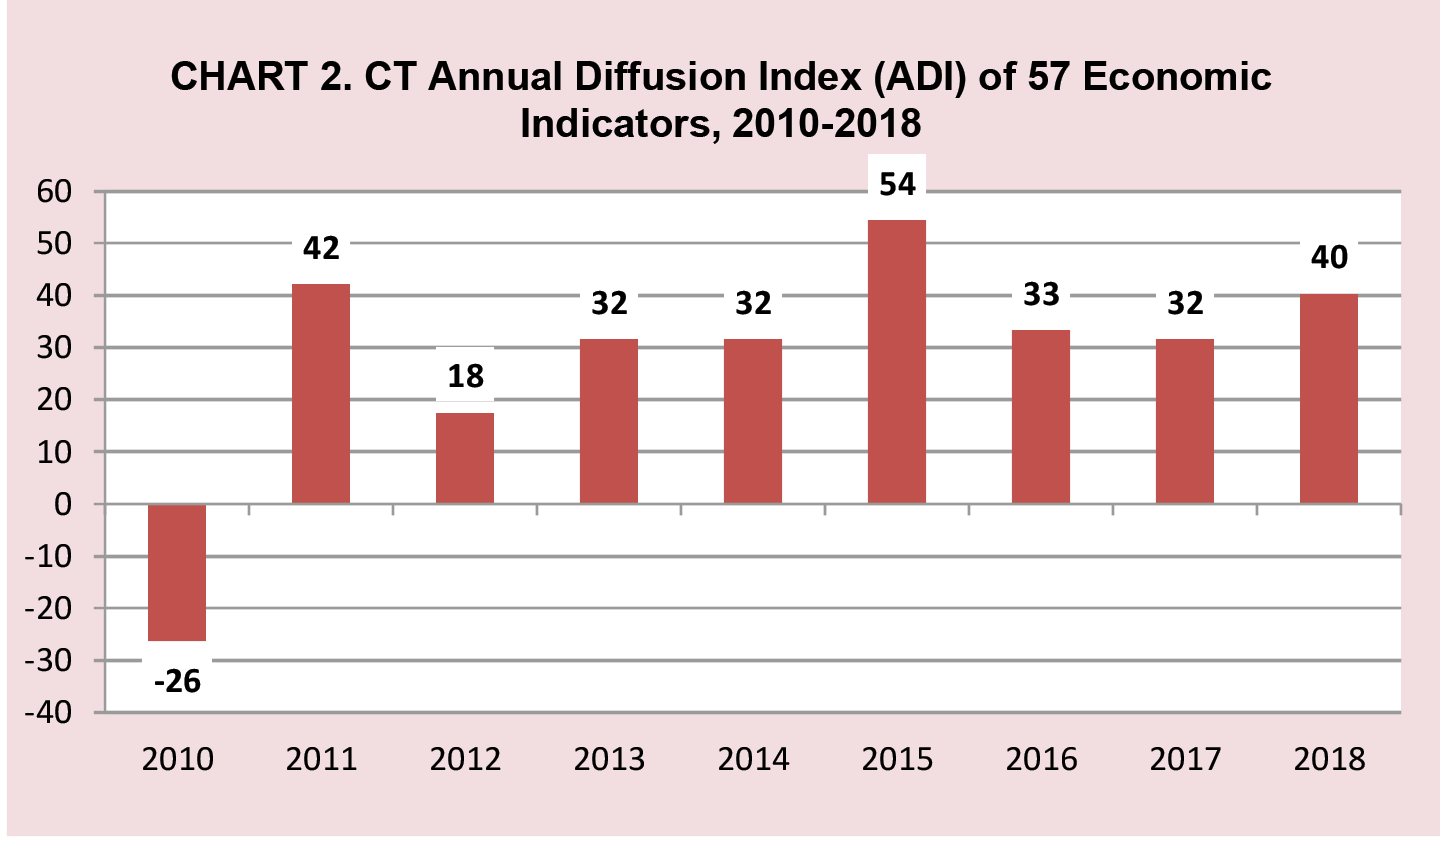 CHART 2. CT Annual Diffusion Index (ADI) of 57 Economic Indicators, 2010-2018